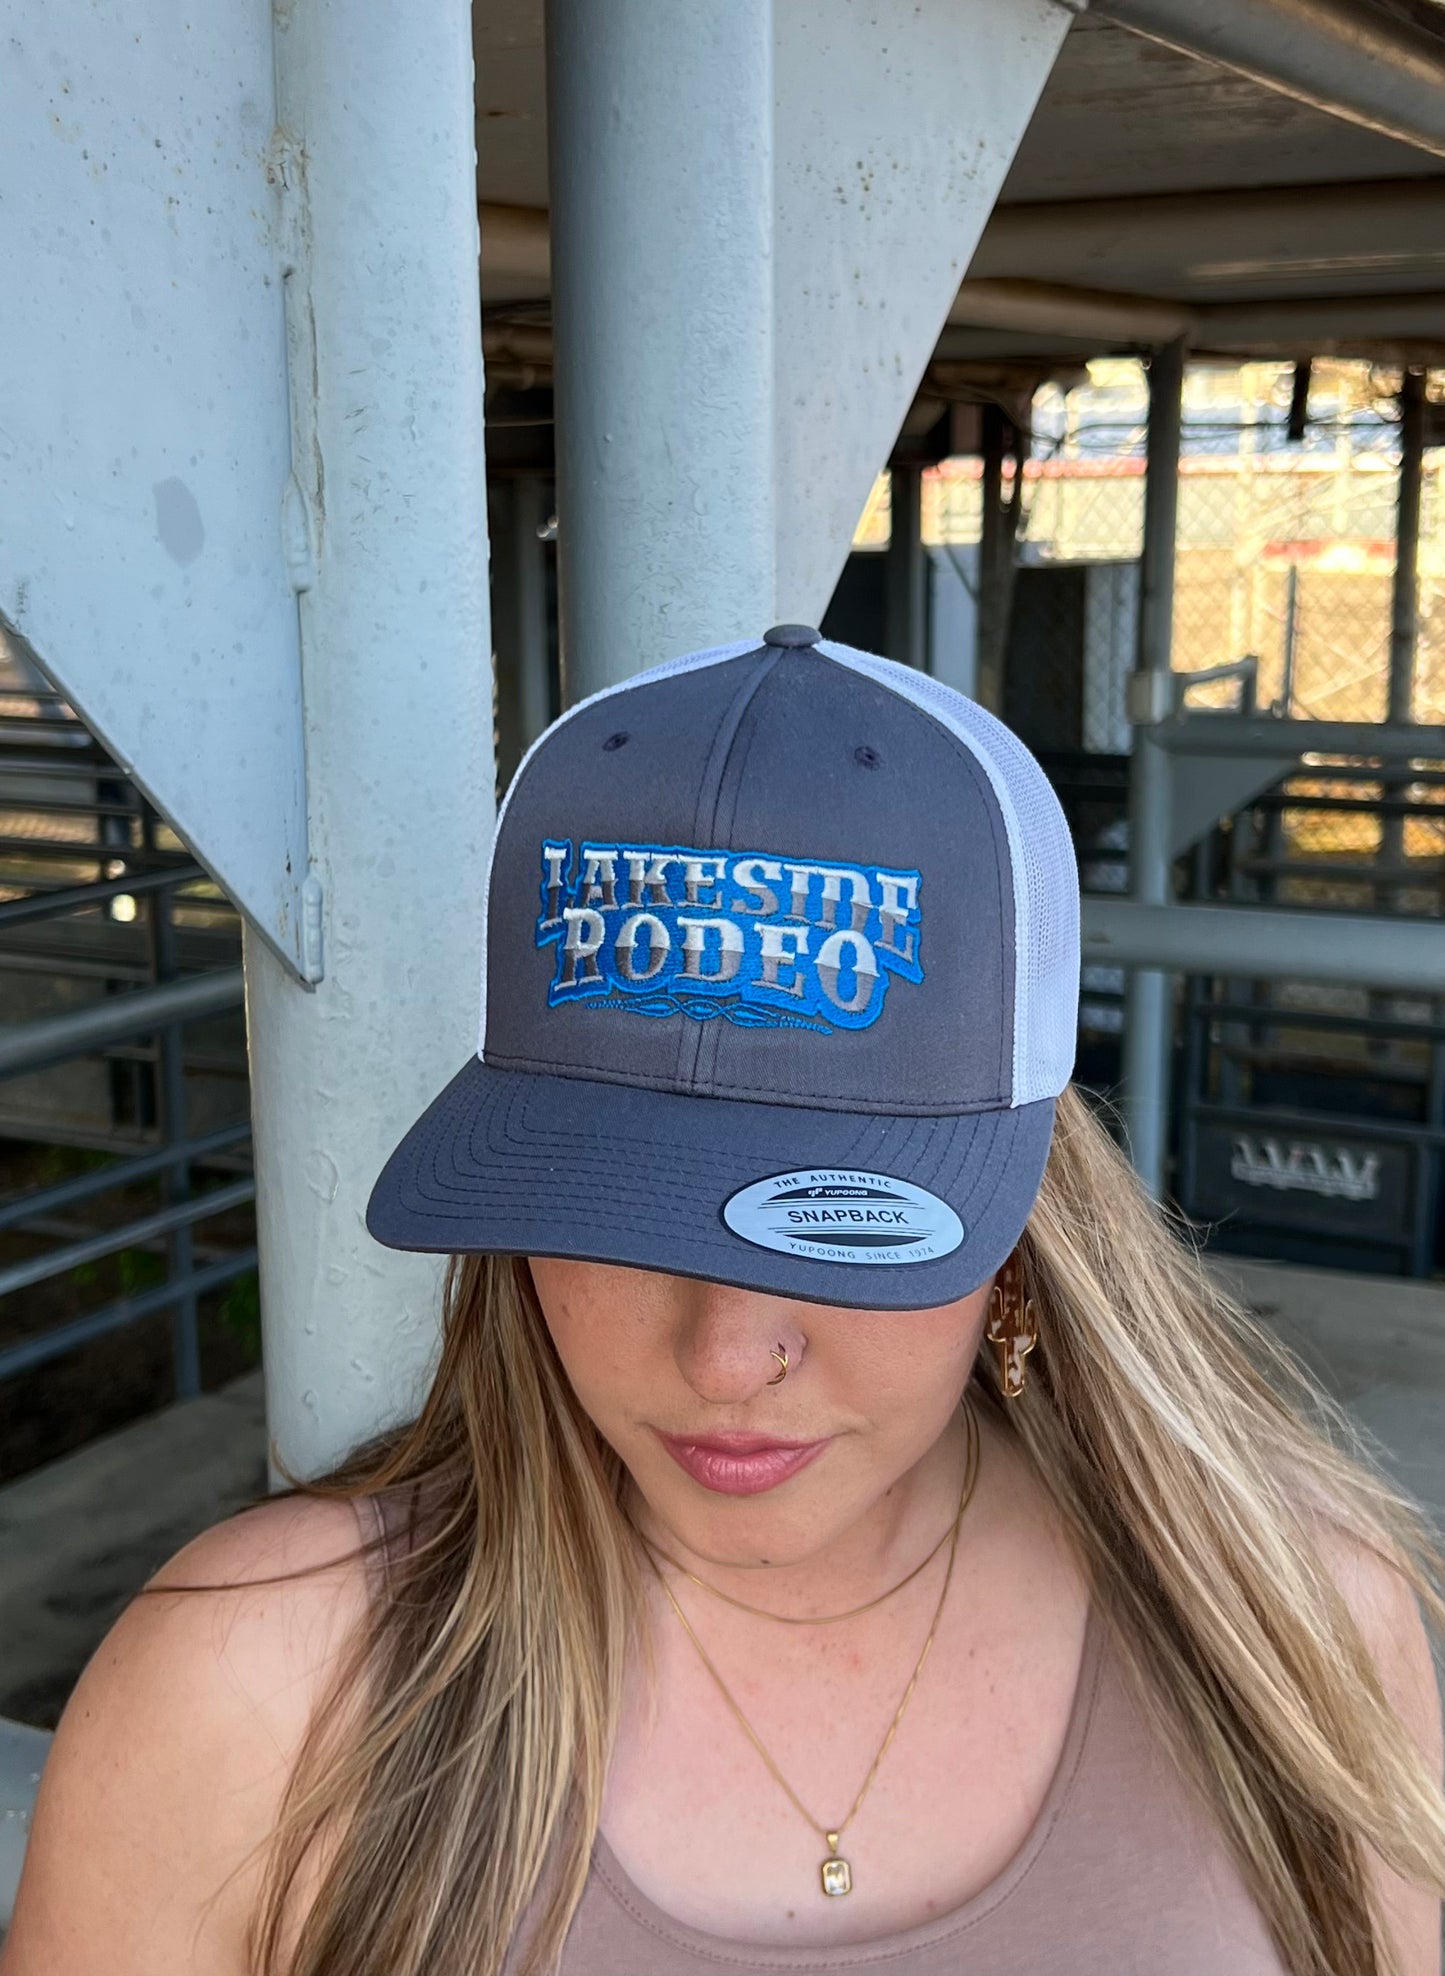 Lakeside Rodeo Trucker Hat - Graphite/White/Blue